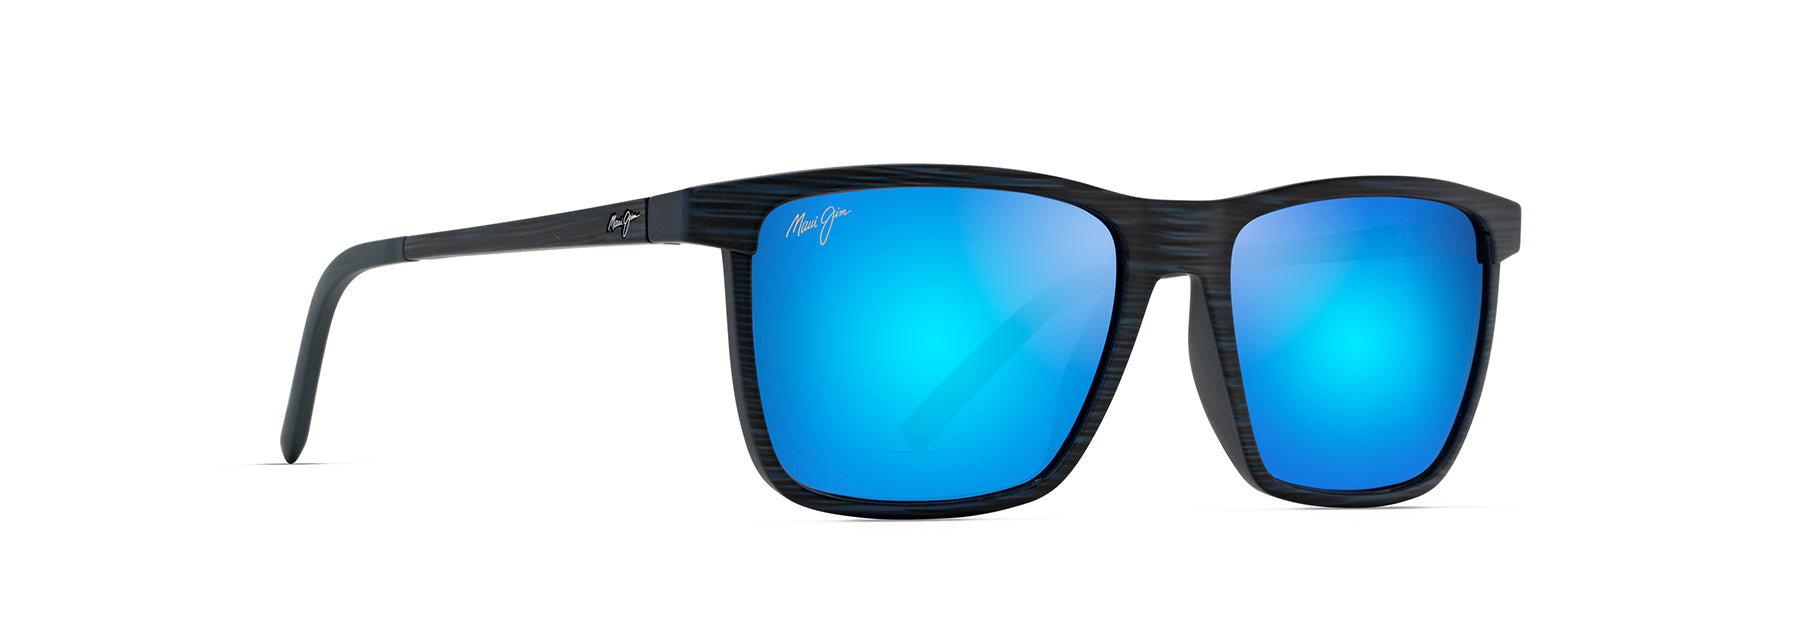 Maui Jim One Way Sunglasses – American Sunglass